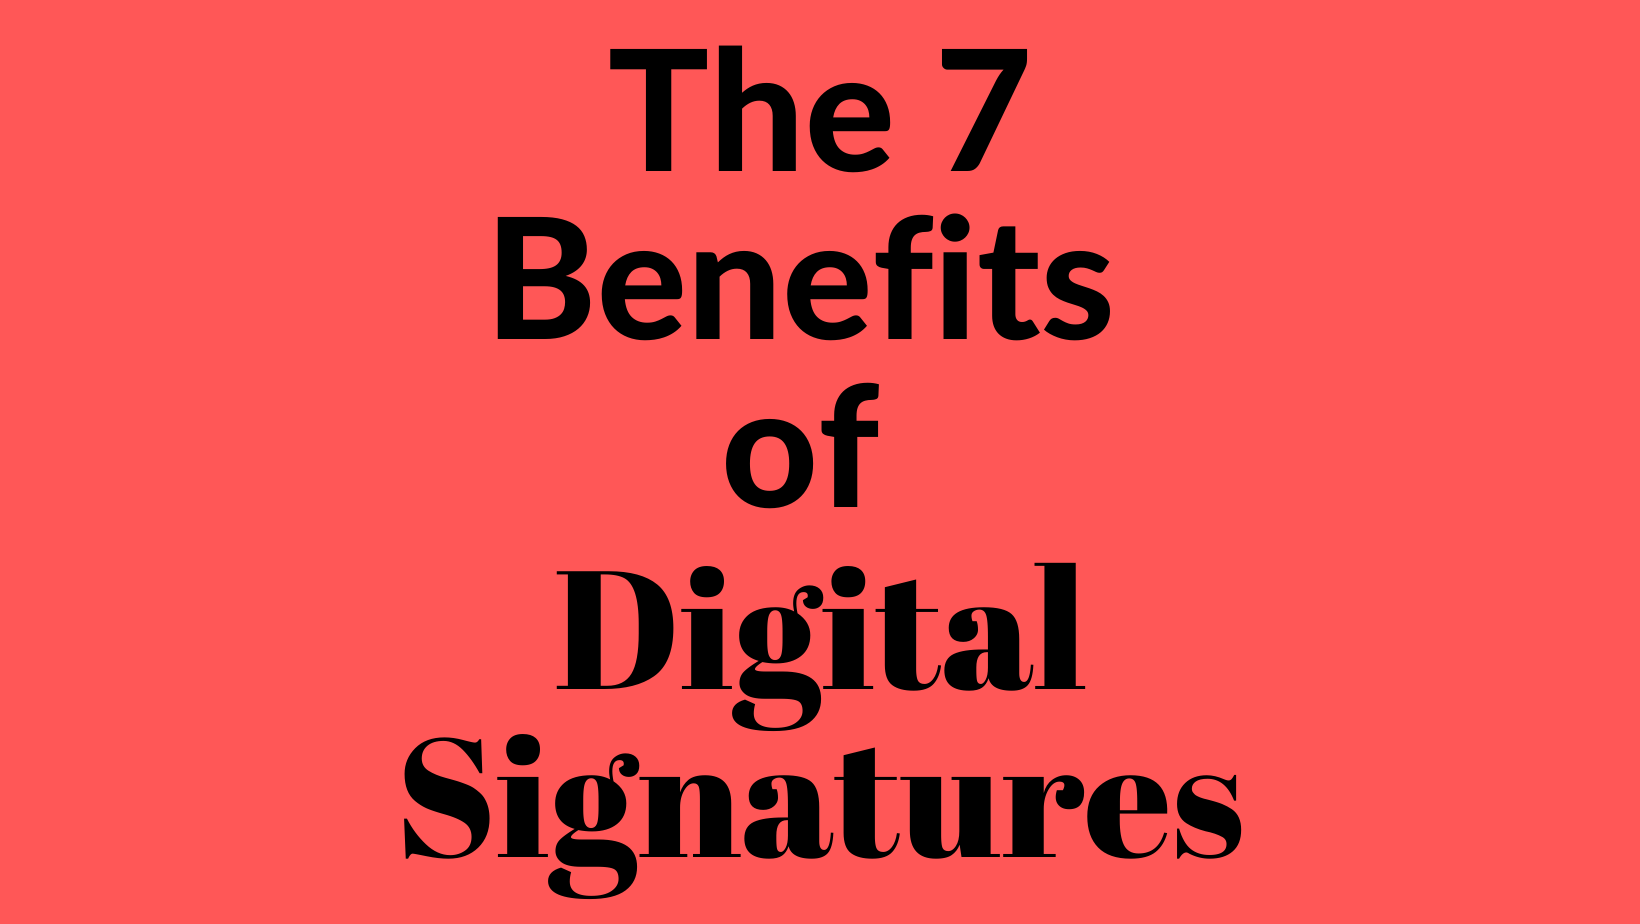 The 7 benefits of Digital Signatures